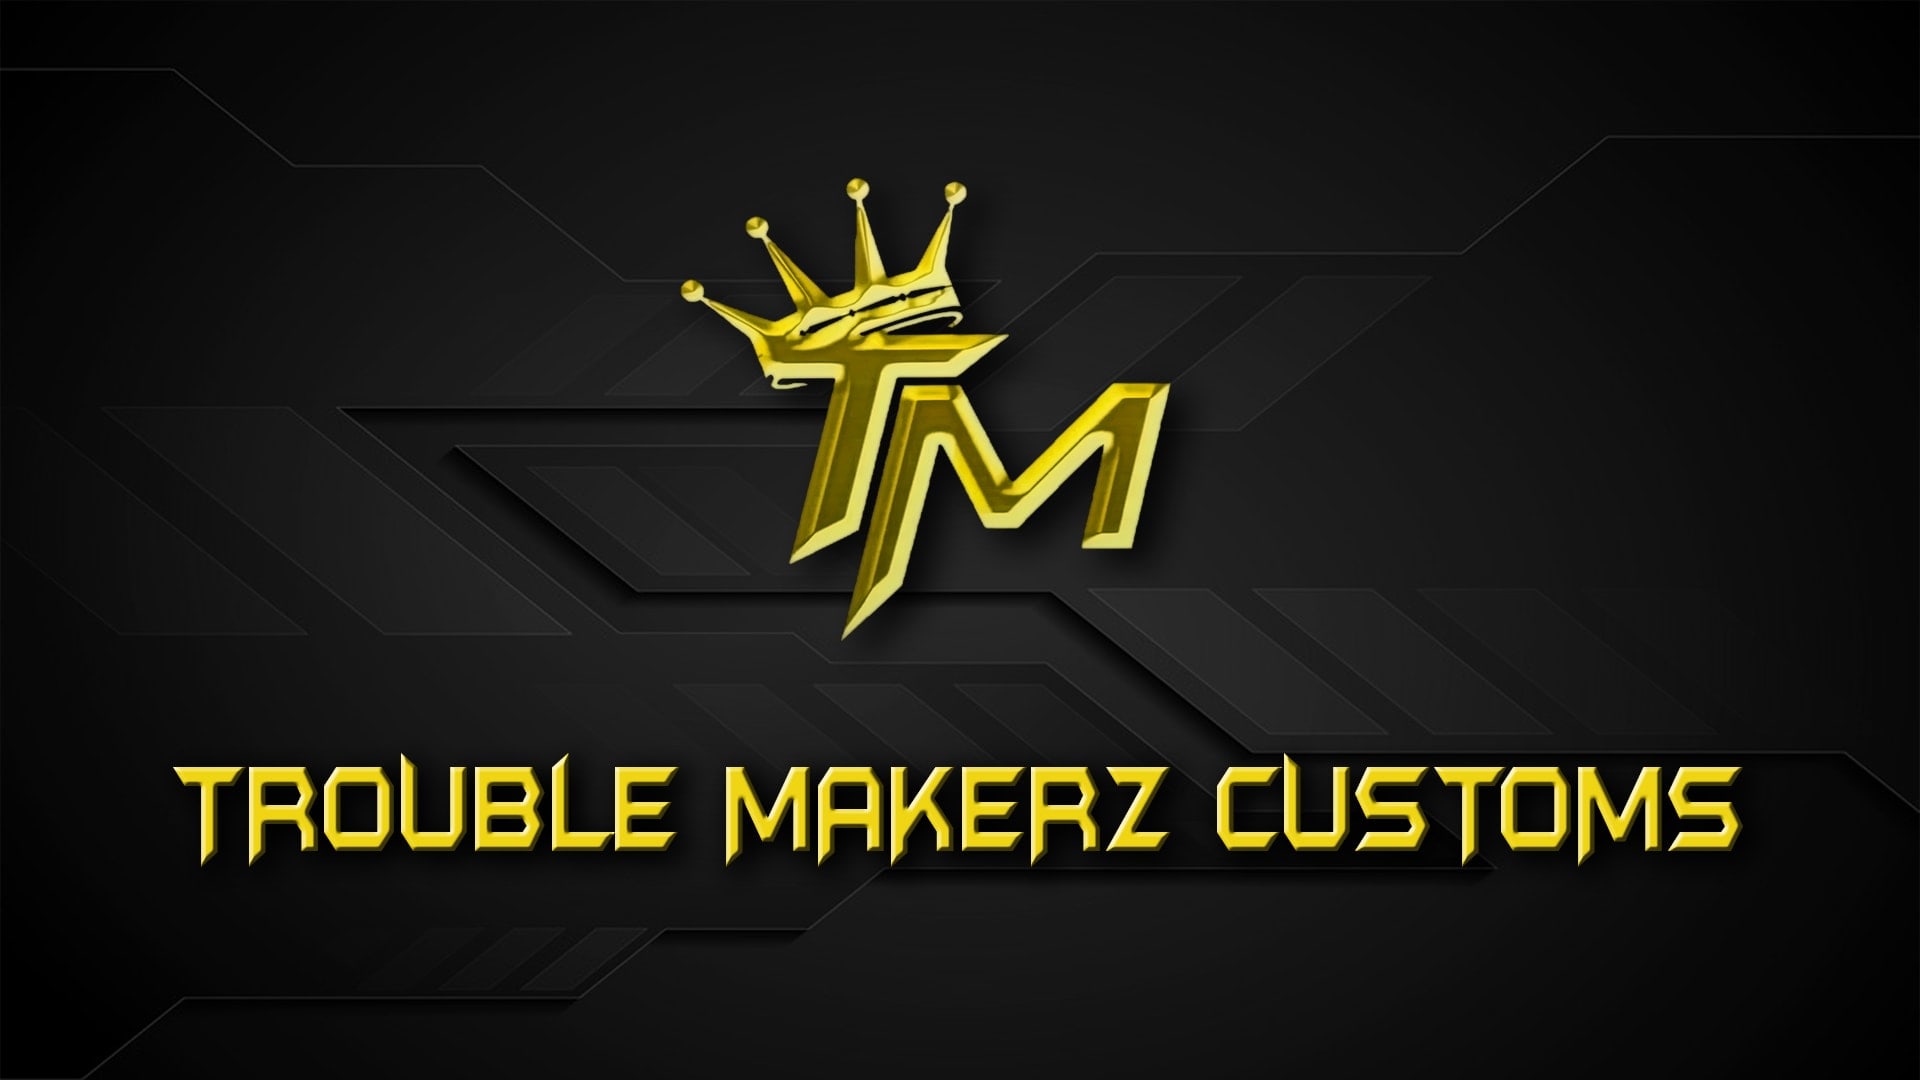 Trouble Makerz Customs